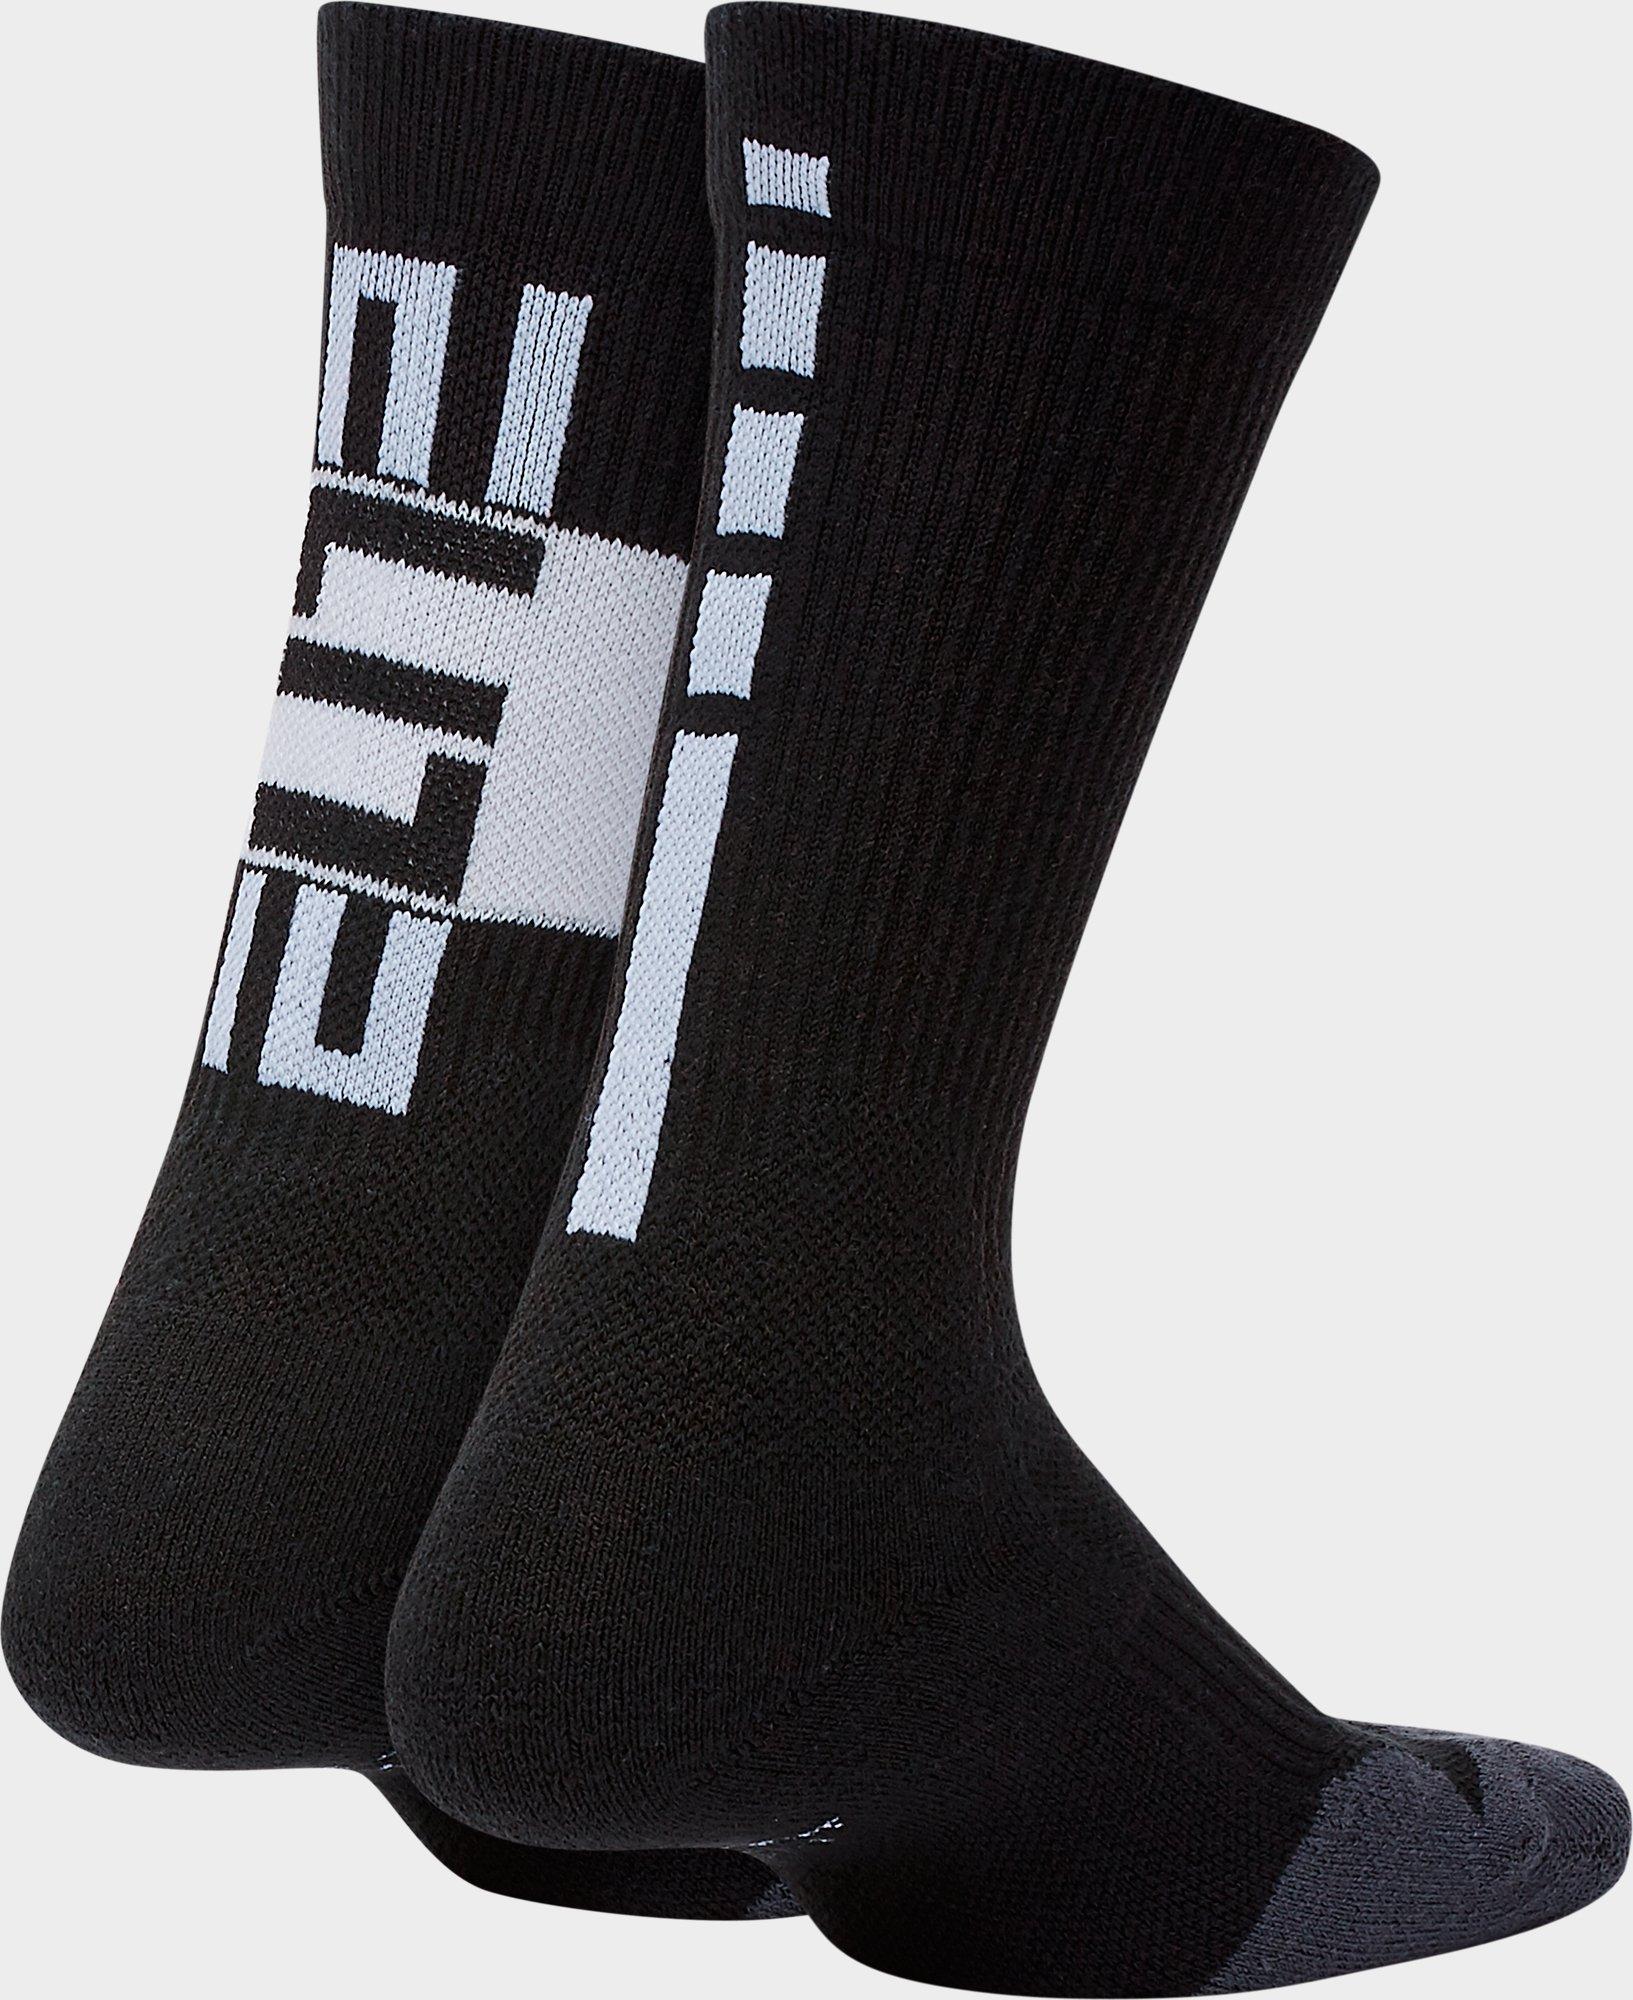 boys elite socks